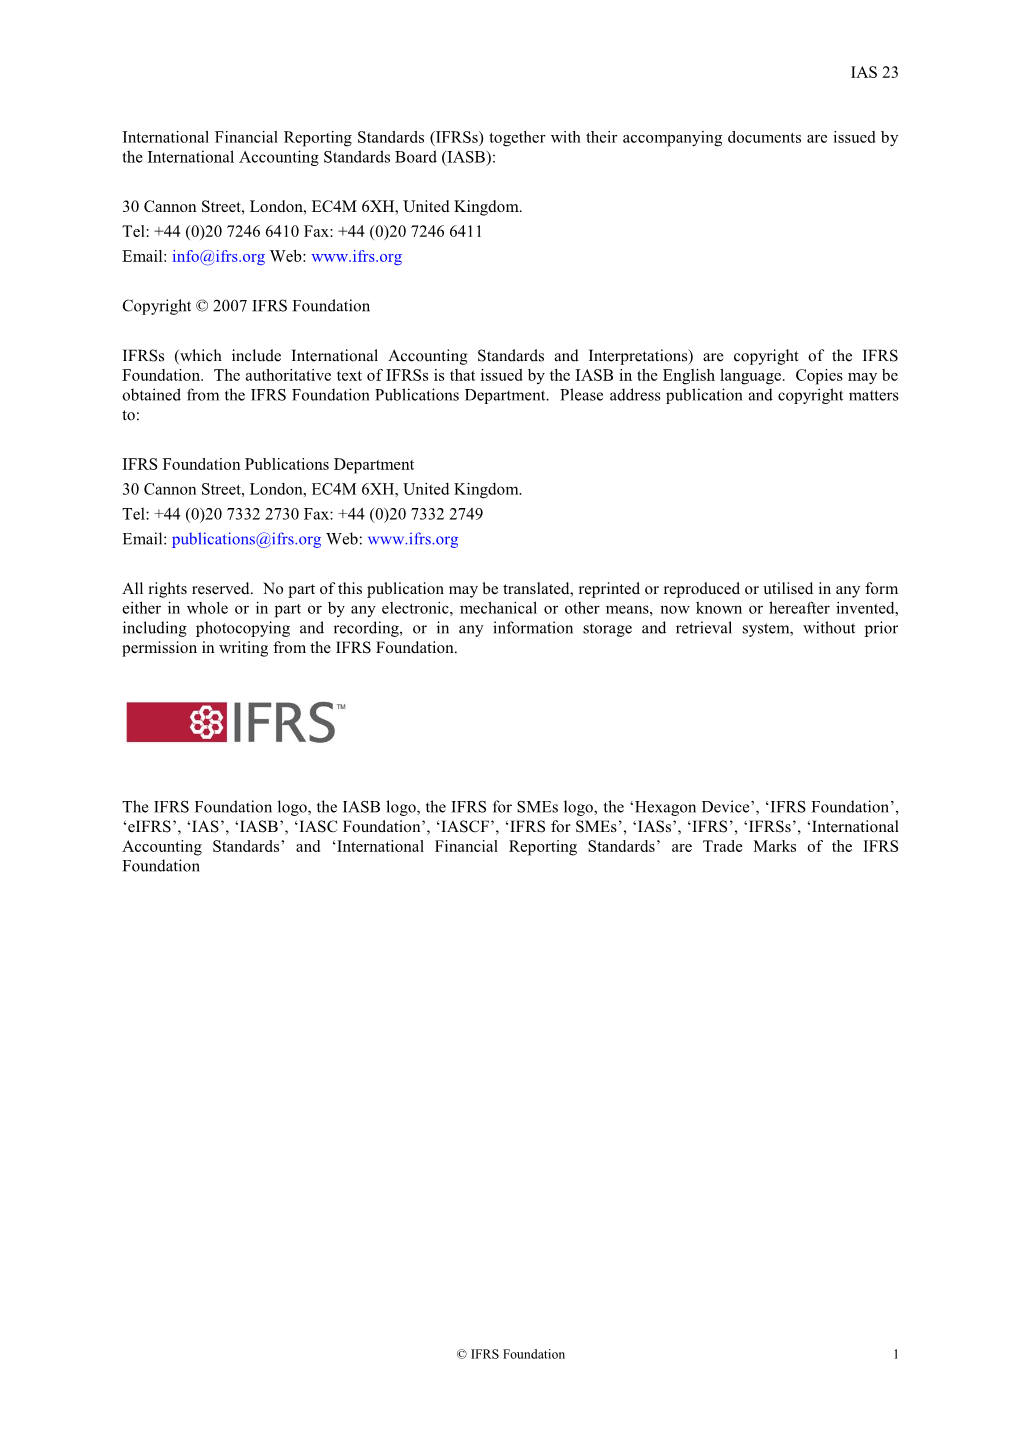 IAS 23 International Financial Reporting Standards (Ifrss